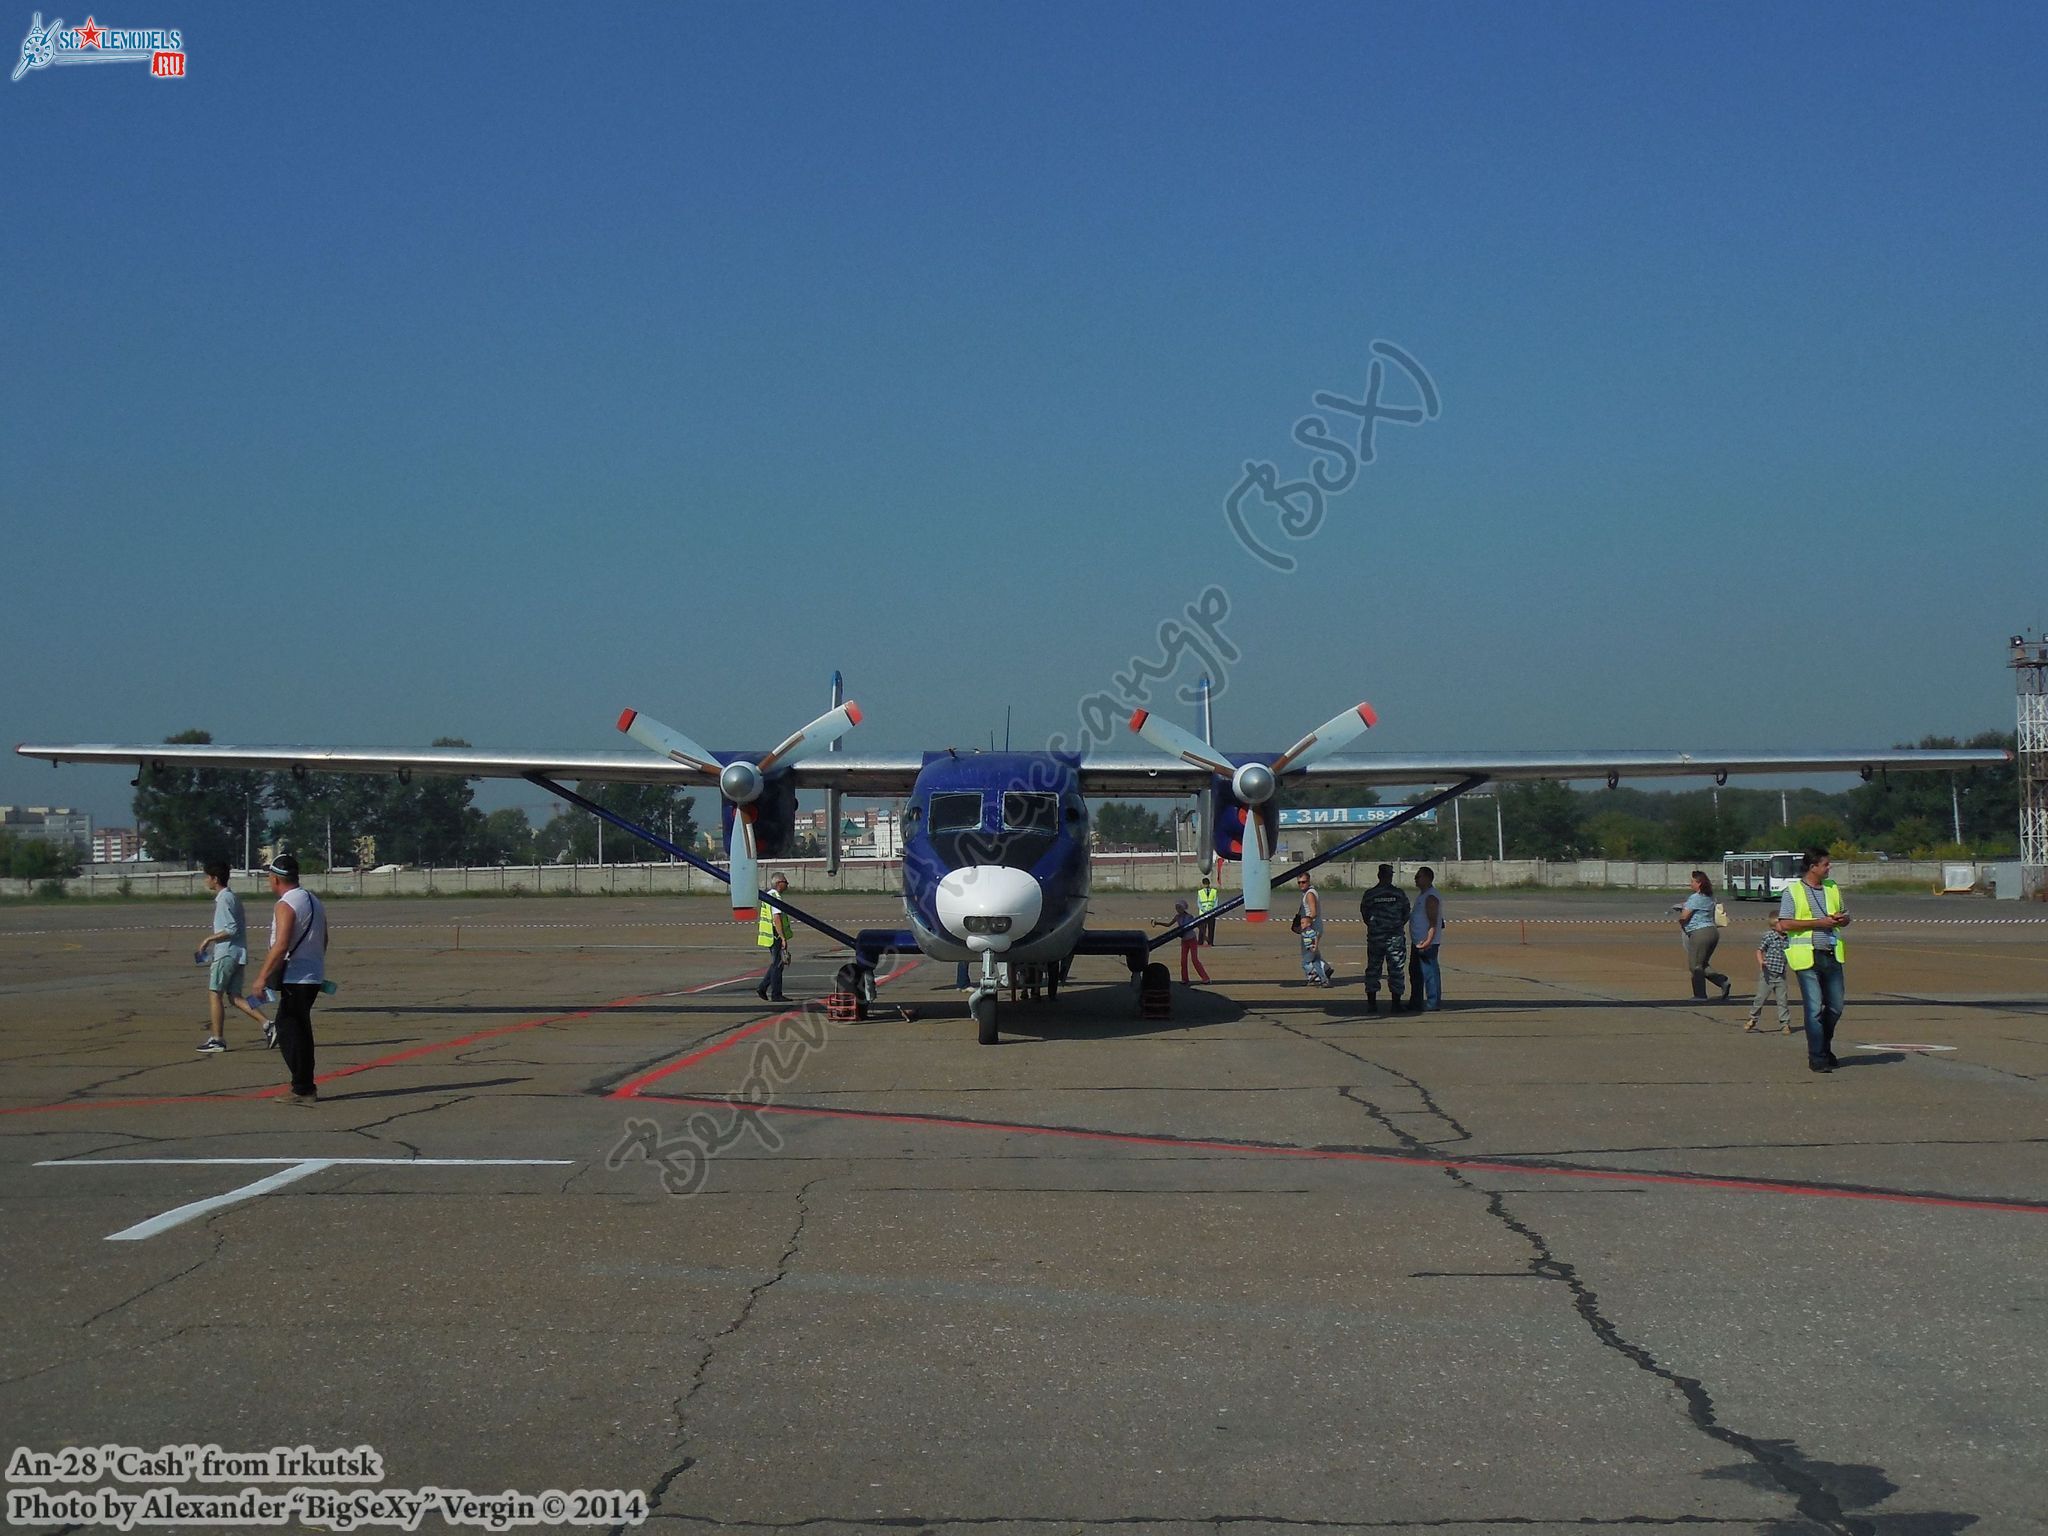 An-28 (RA-28728)_Irkutsk_004